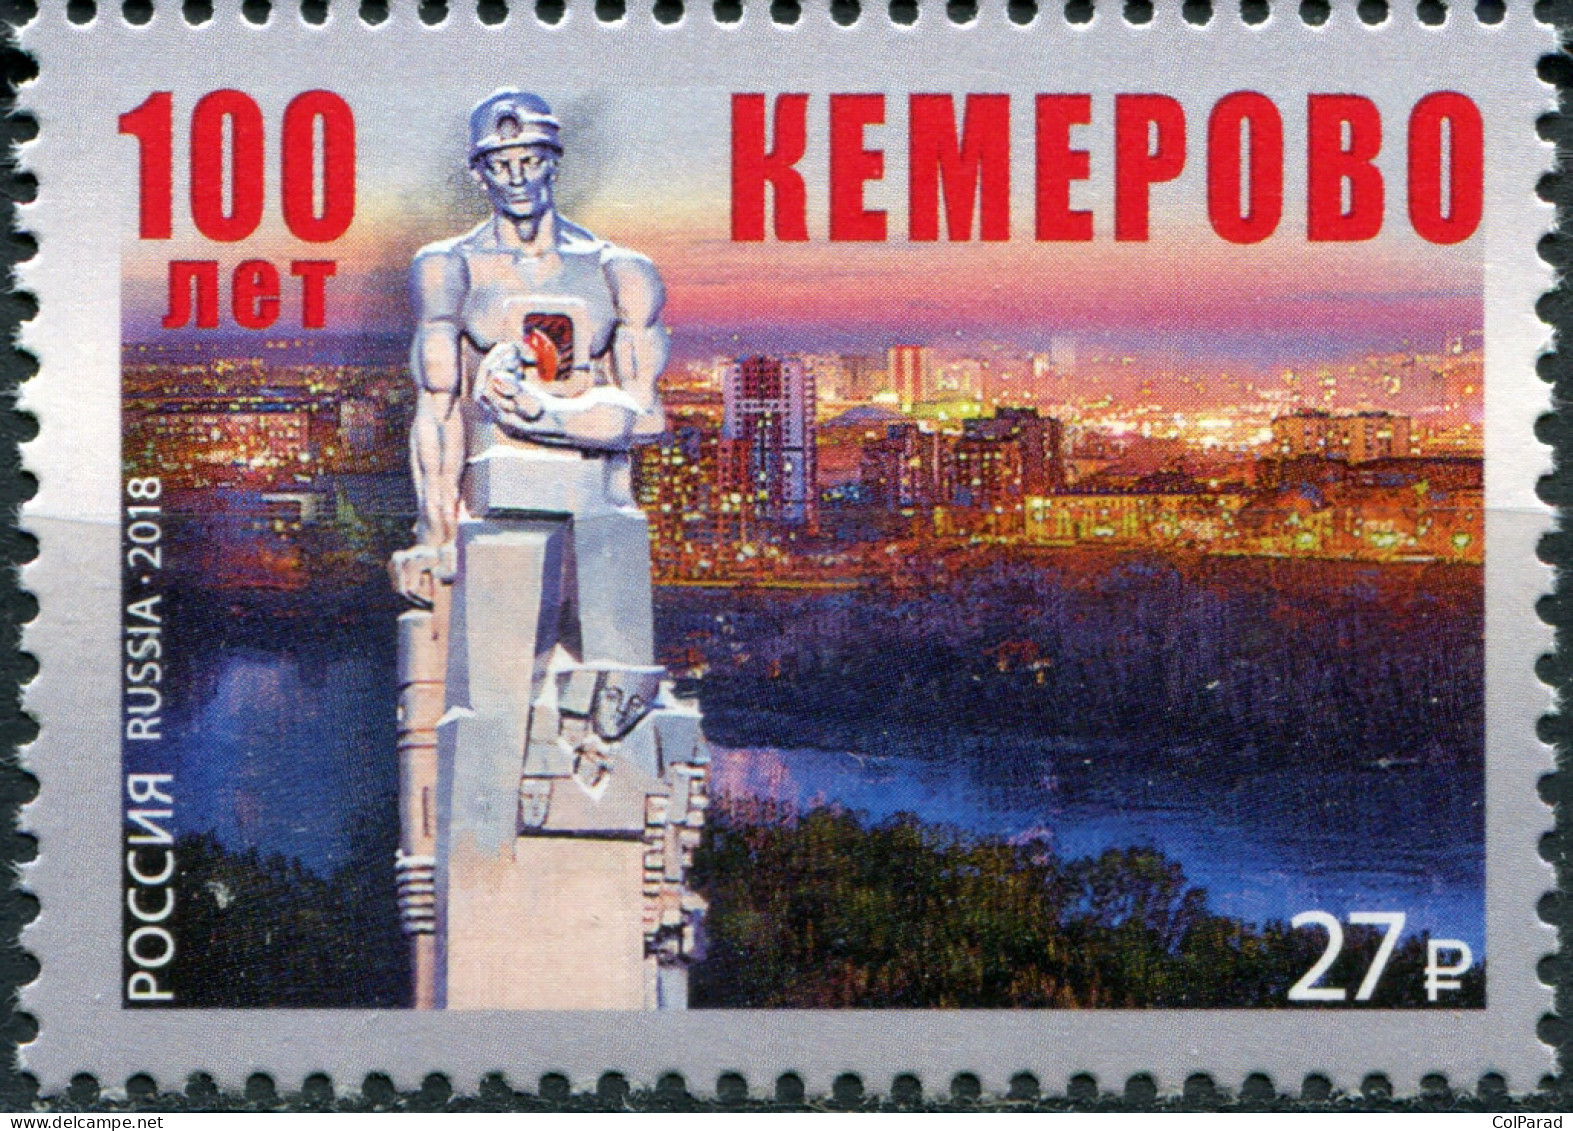 RUSSIA - 2018 -  STAMP MNH ** - Centenary Of City Of Kemerovo - Neufs